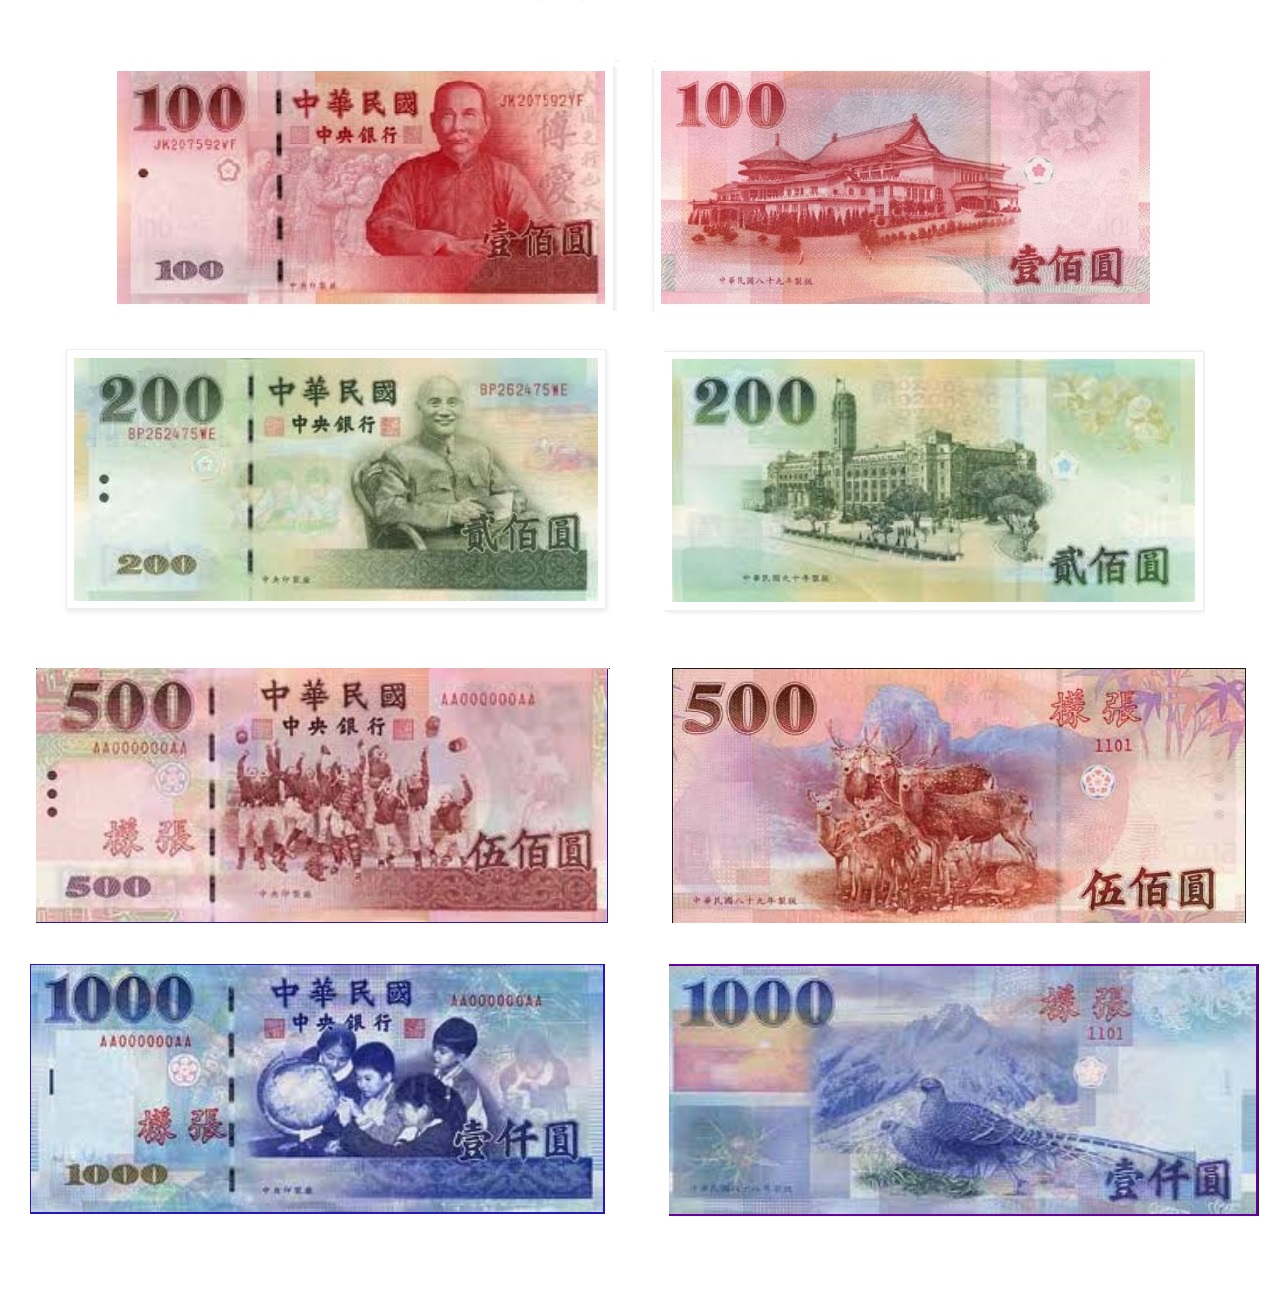 New Taiwan dollarTaiwan Dollar (TWD)